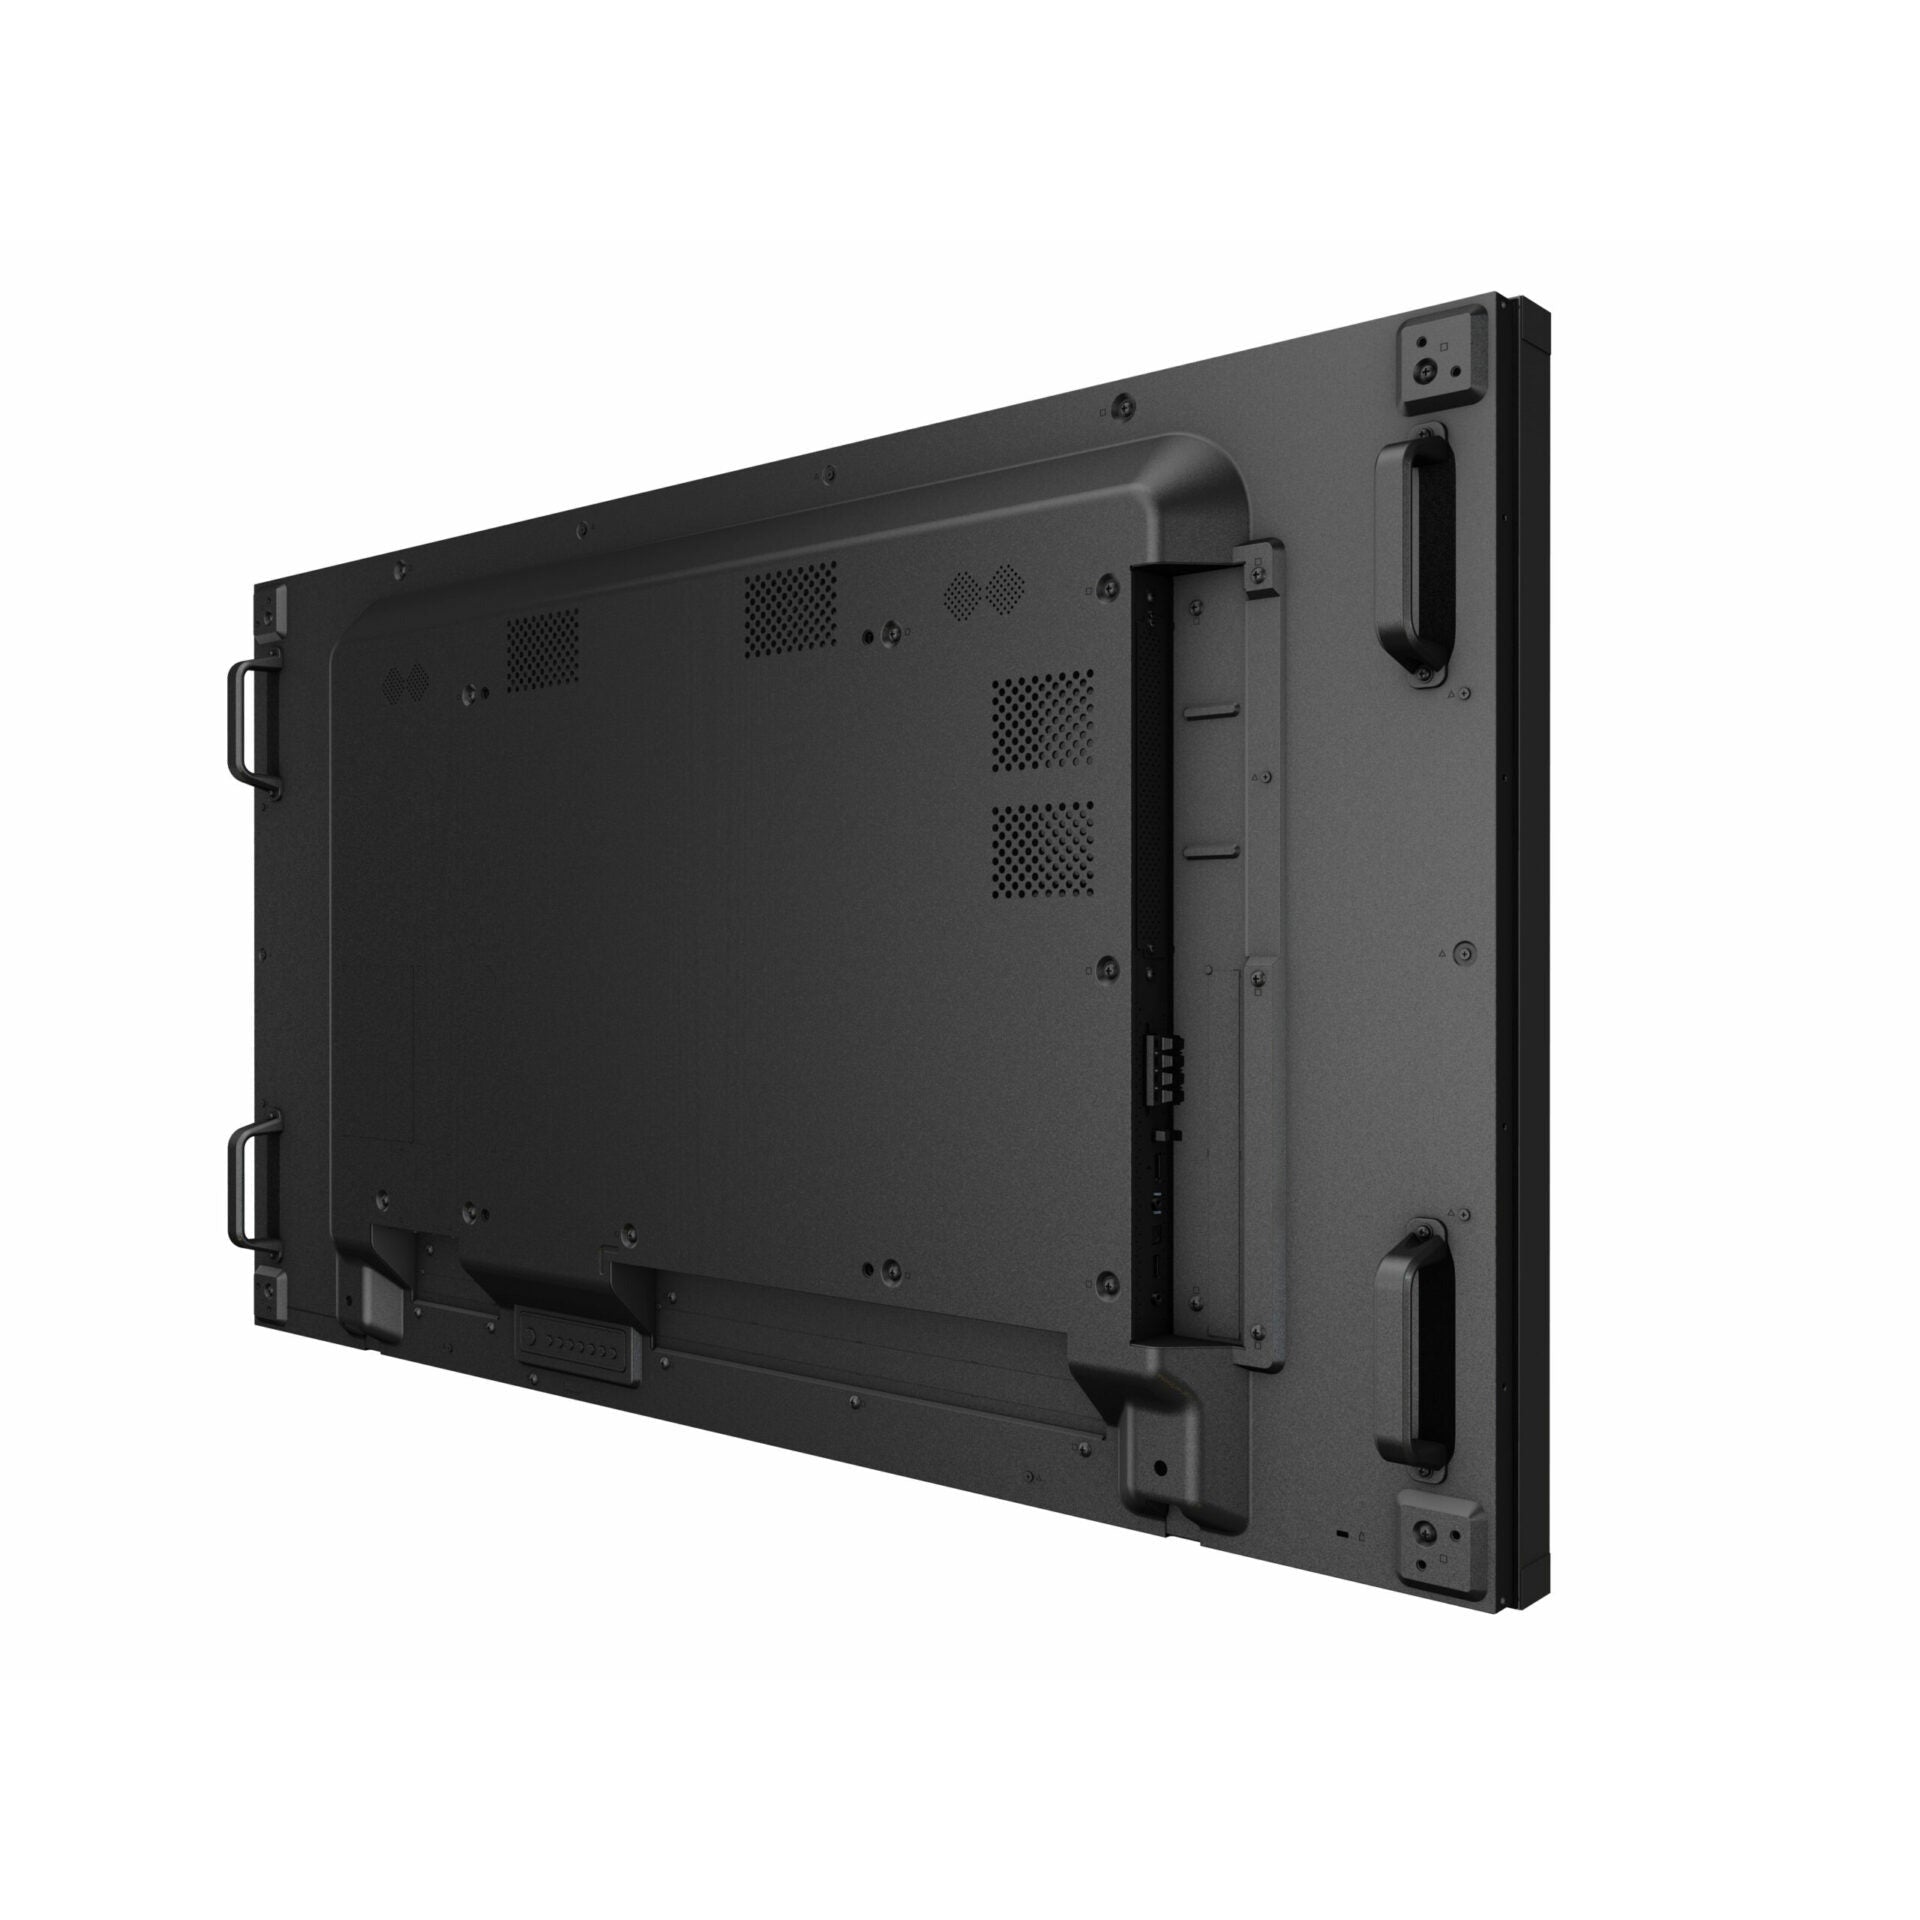 AG Neovo PN-55D3  55-Inch 1080p 500 Nits Ultra Narrow Bezel Video Wall Display